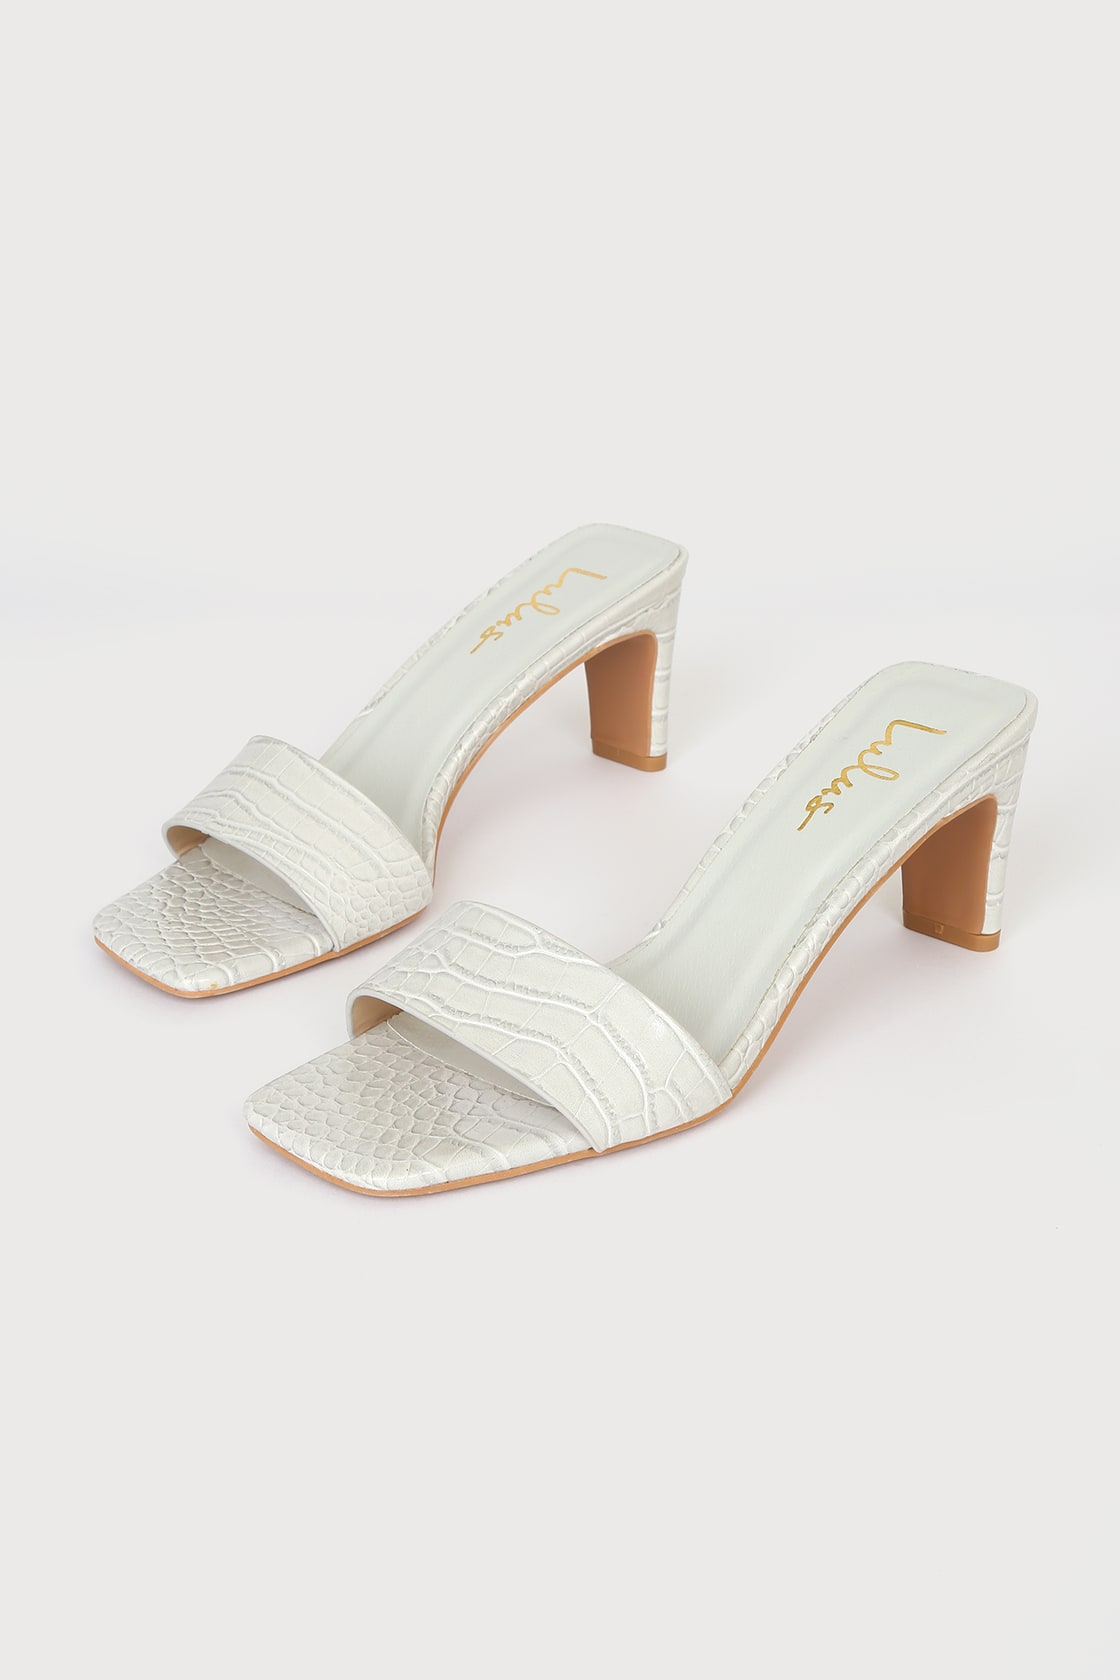 Ivory Heels - Crocodile-Embossed Sandals - High Heel Sandals - Lulus